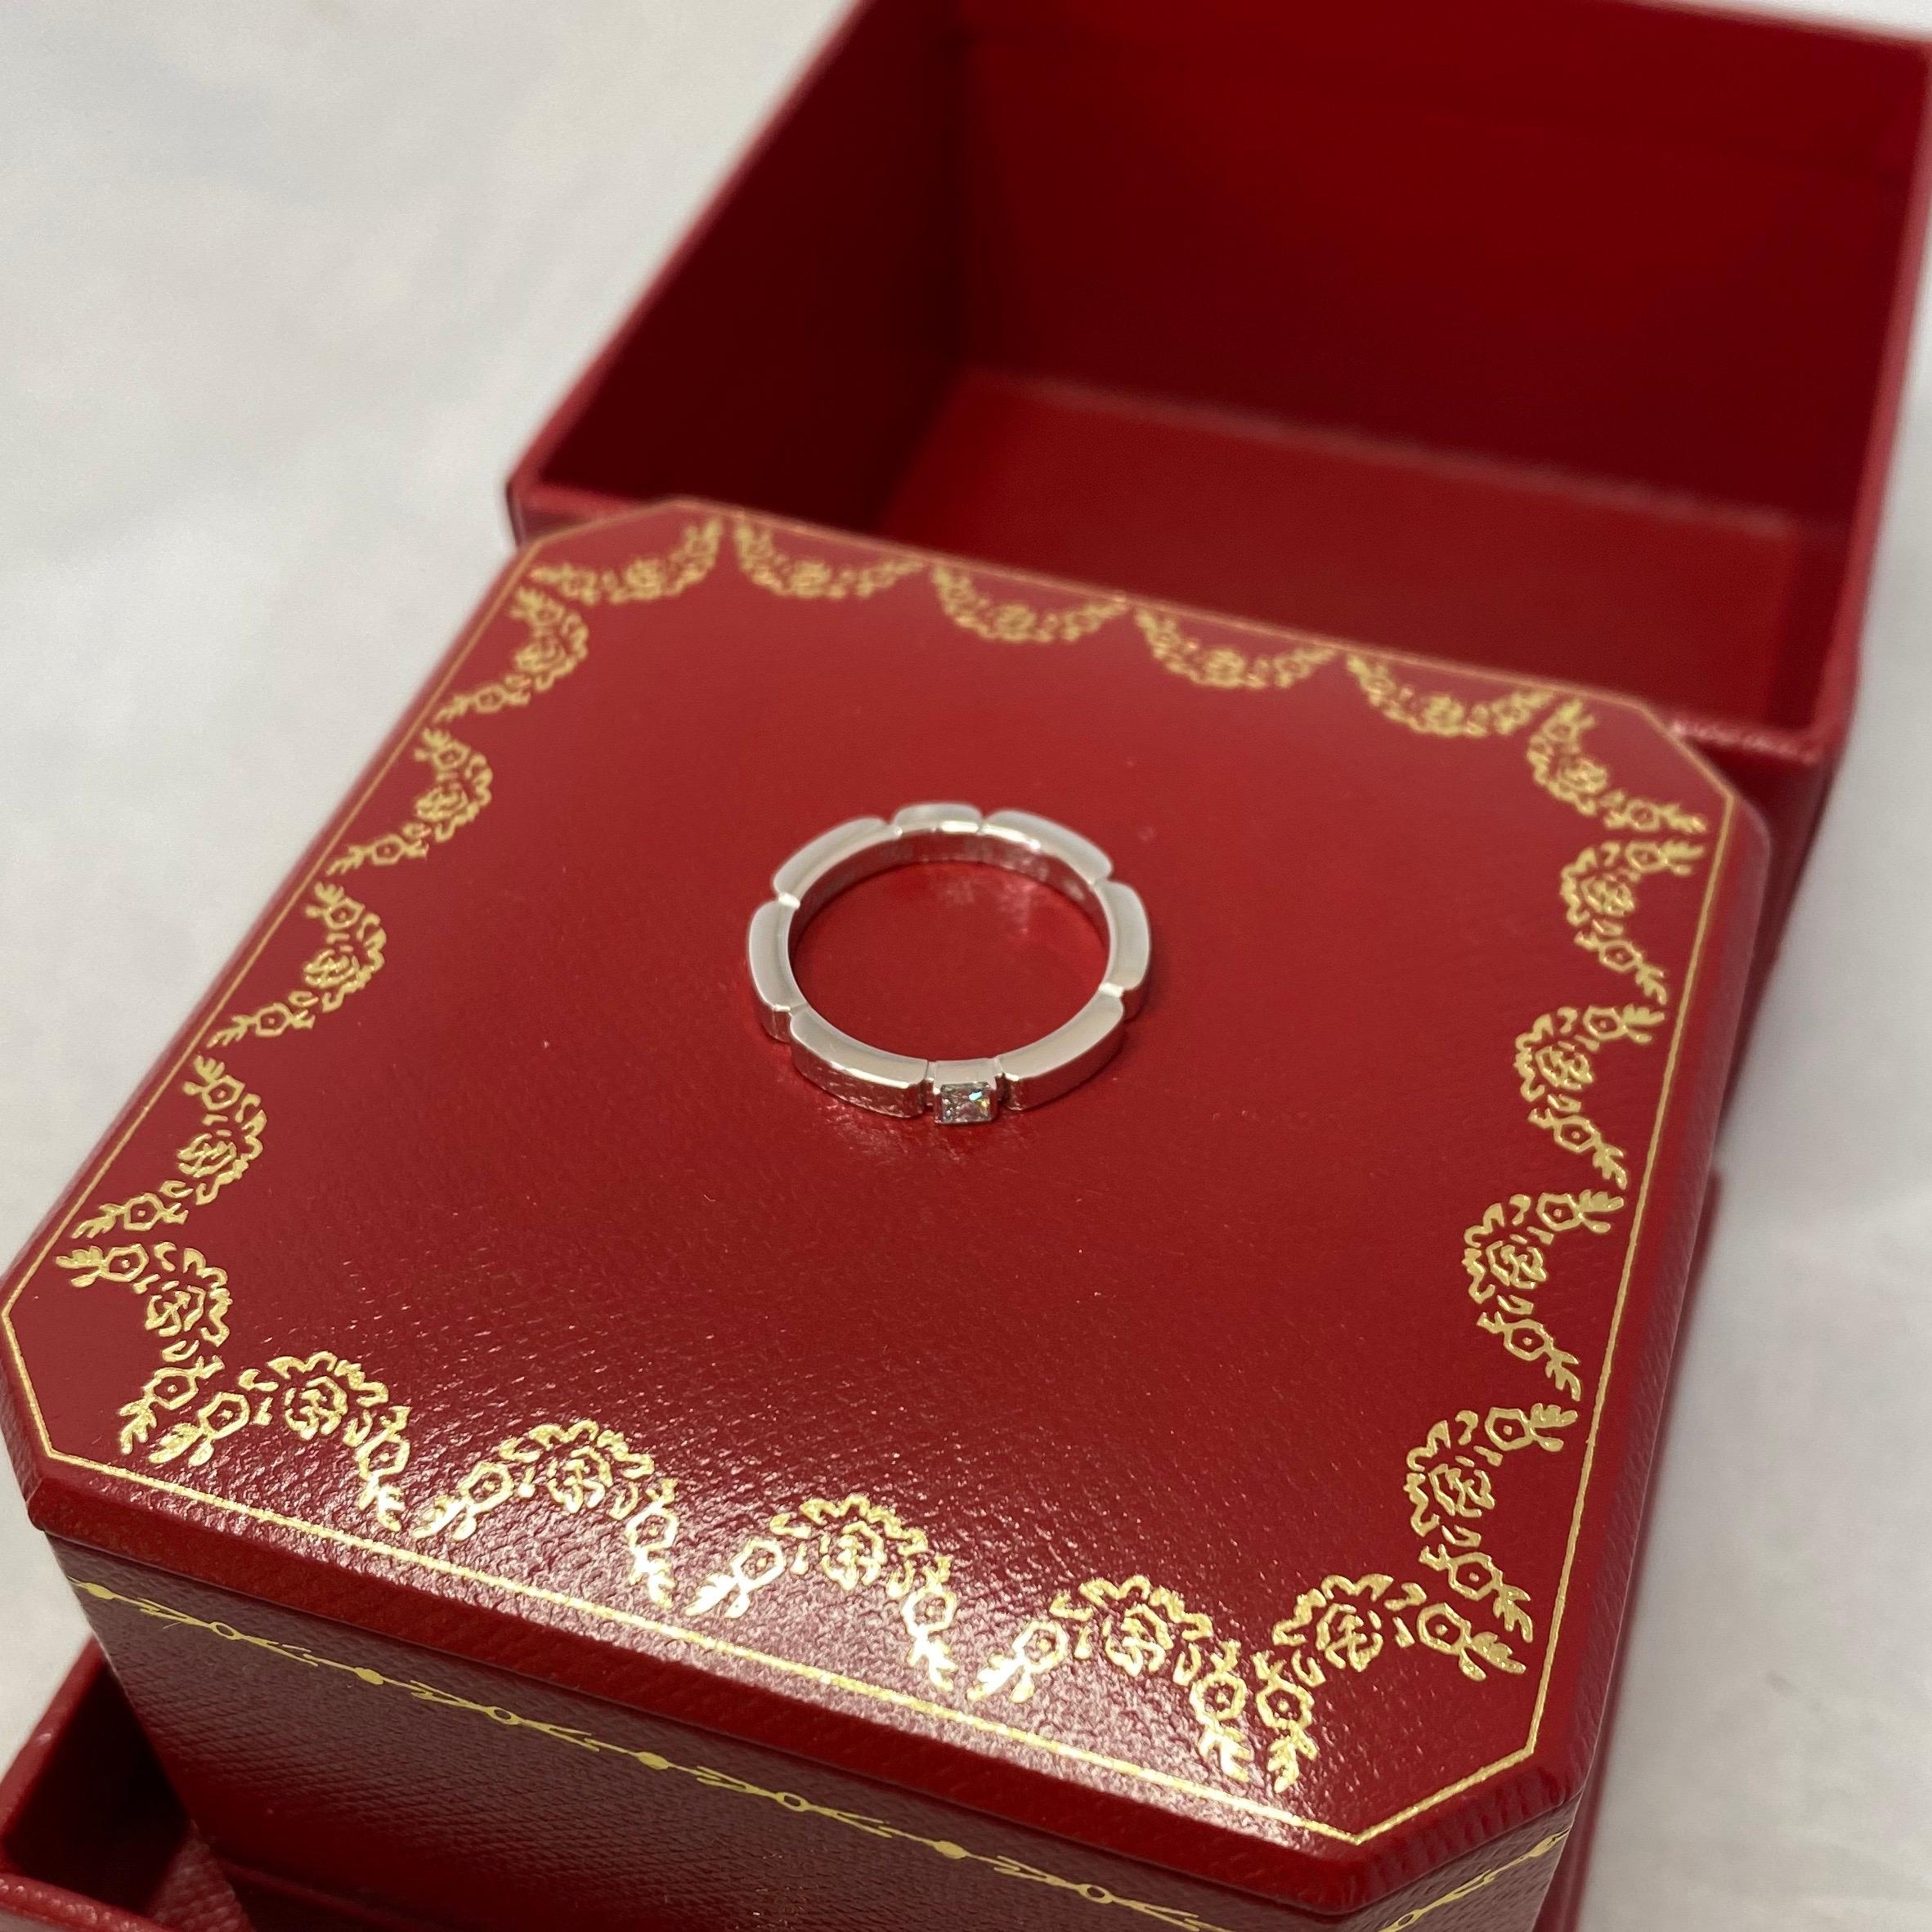 Cartier Maillon Panthere Princess Cut Diamond 18 Karat White Gold Band Ring For Sale 4